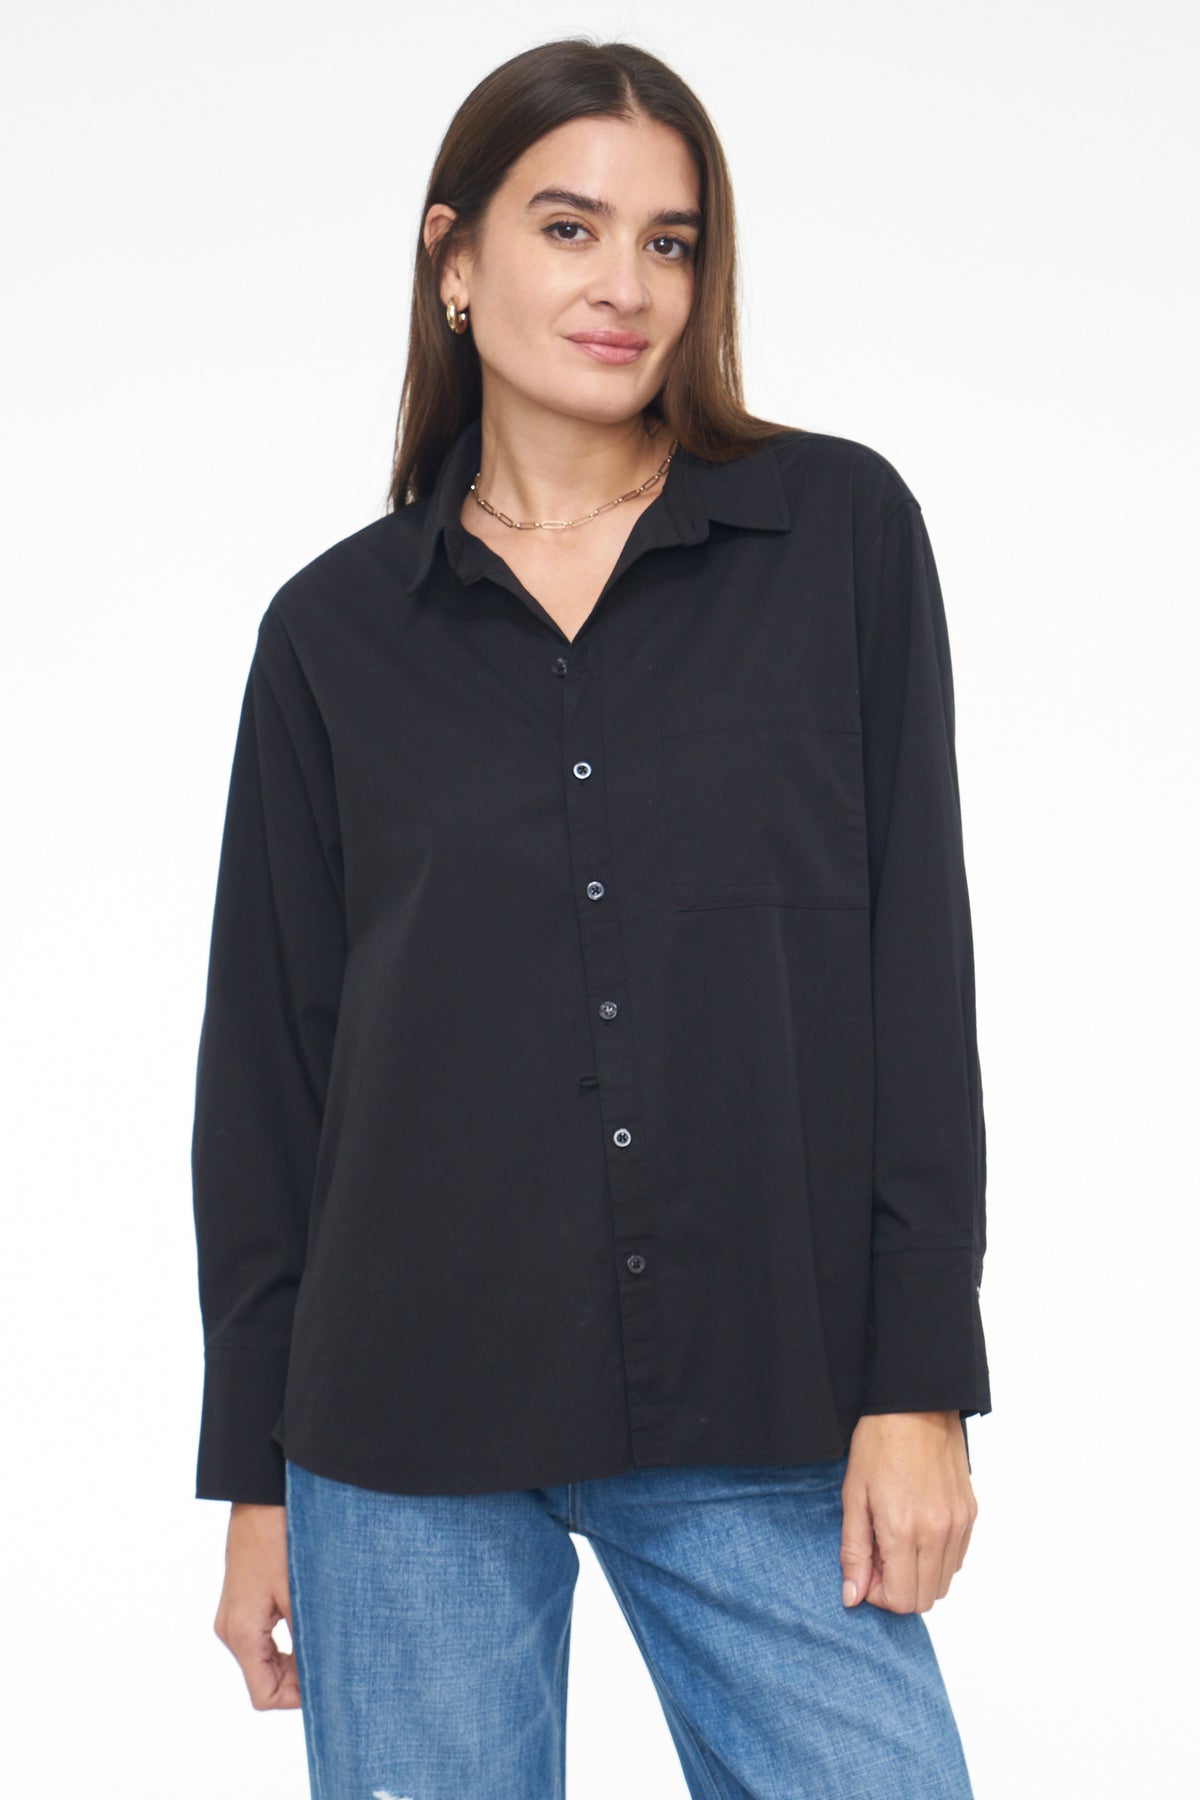 Kaci Long Sleeve Crossover Button Down Shirt - Noir